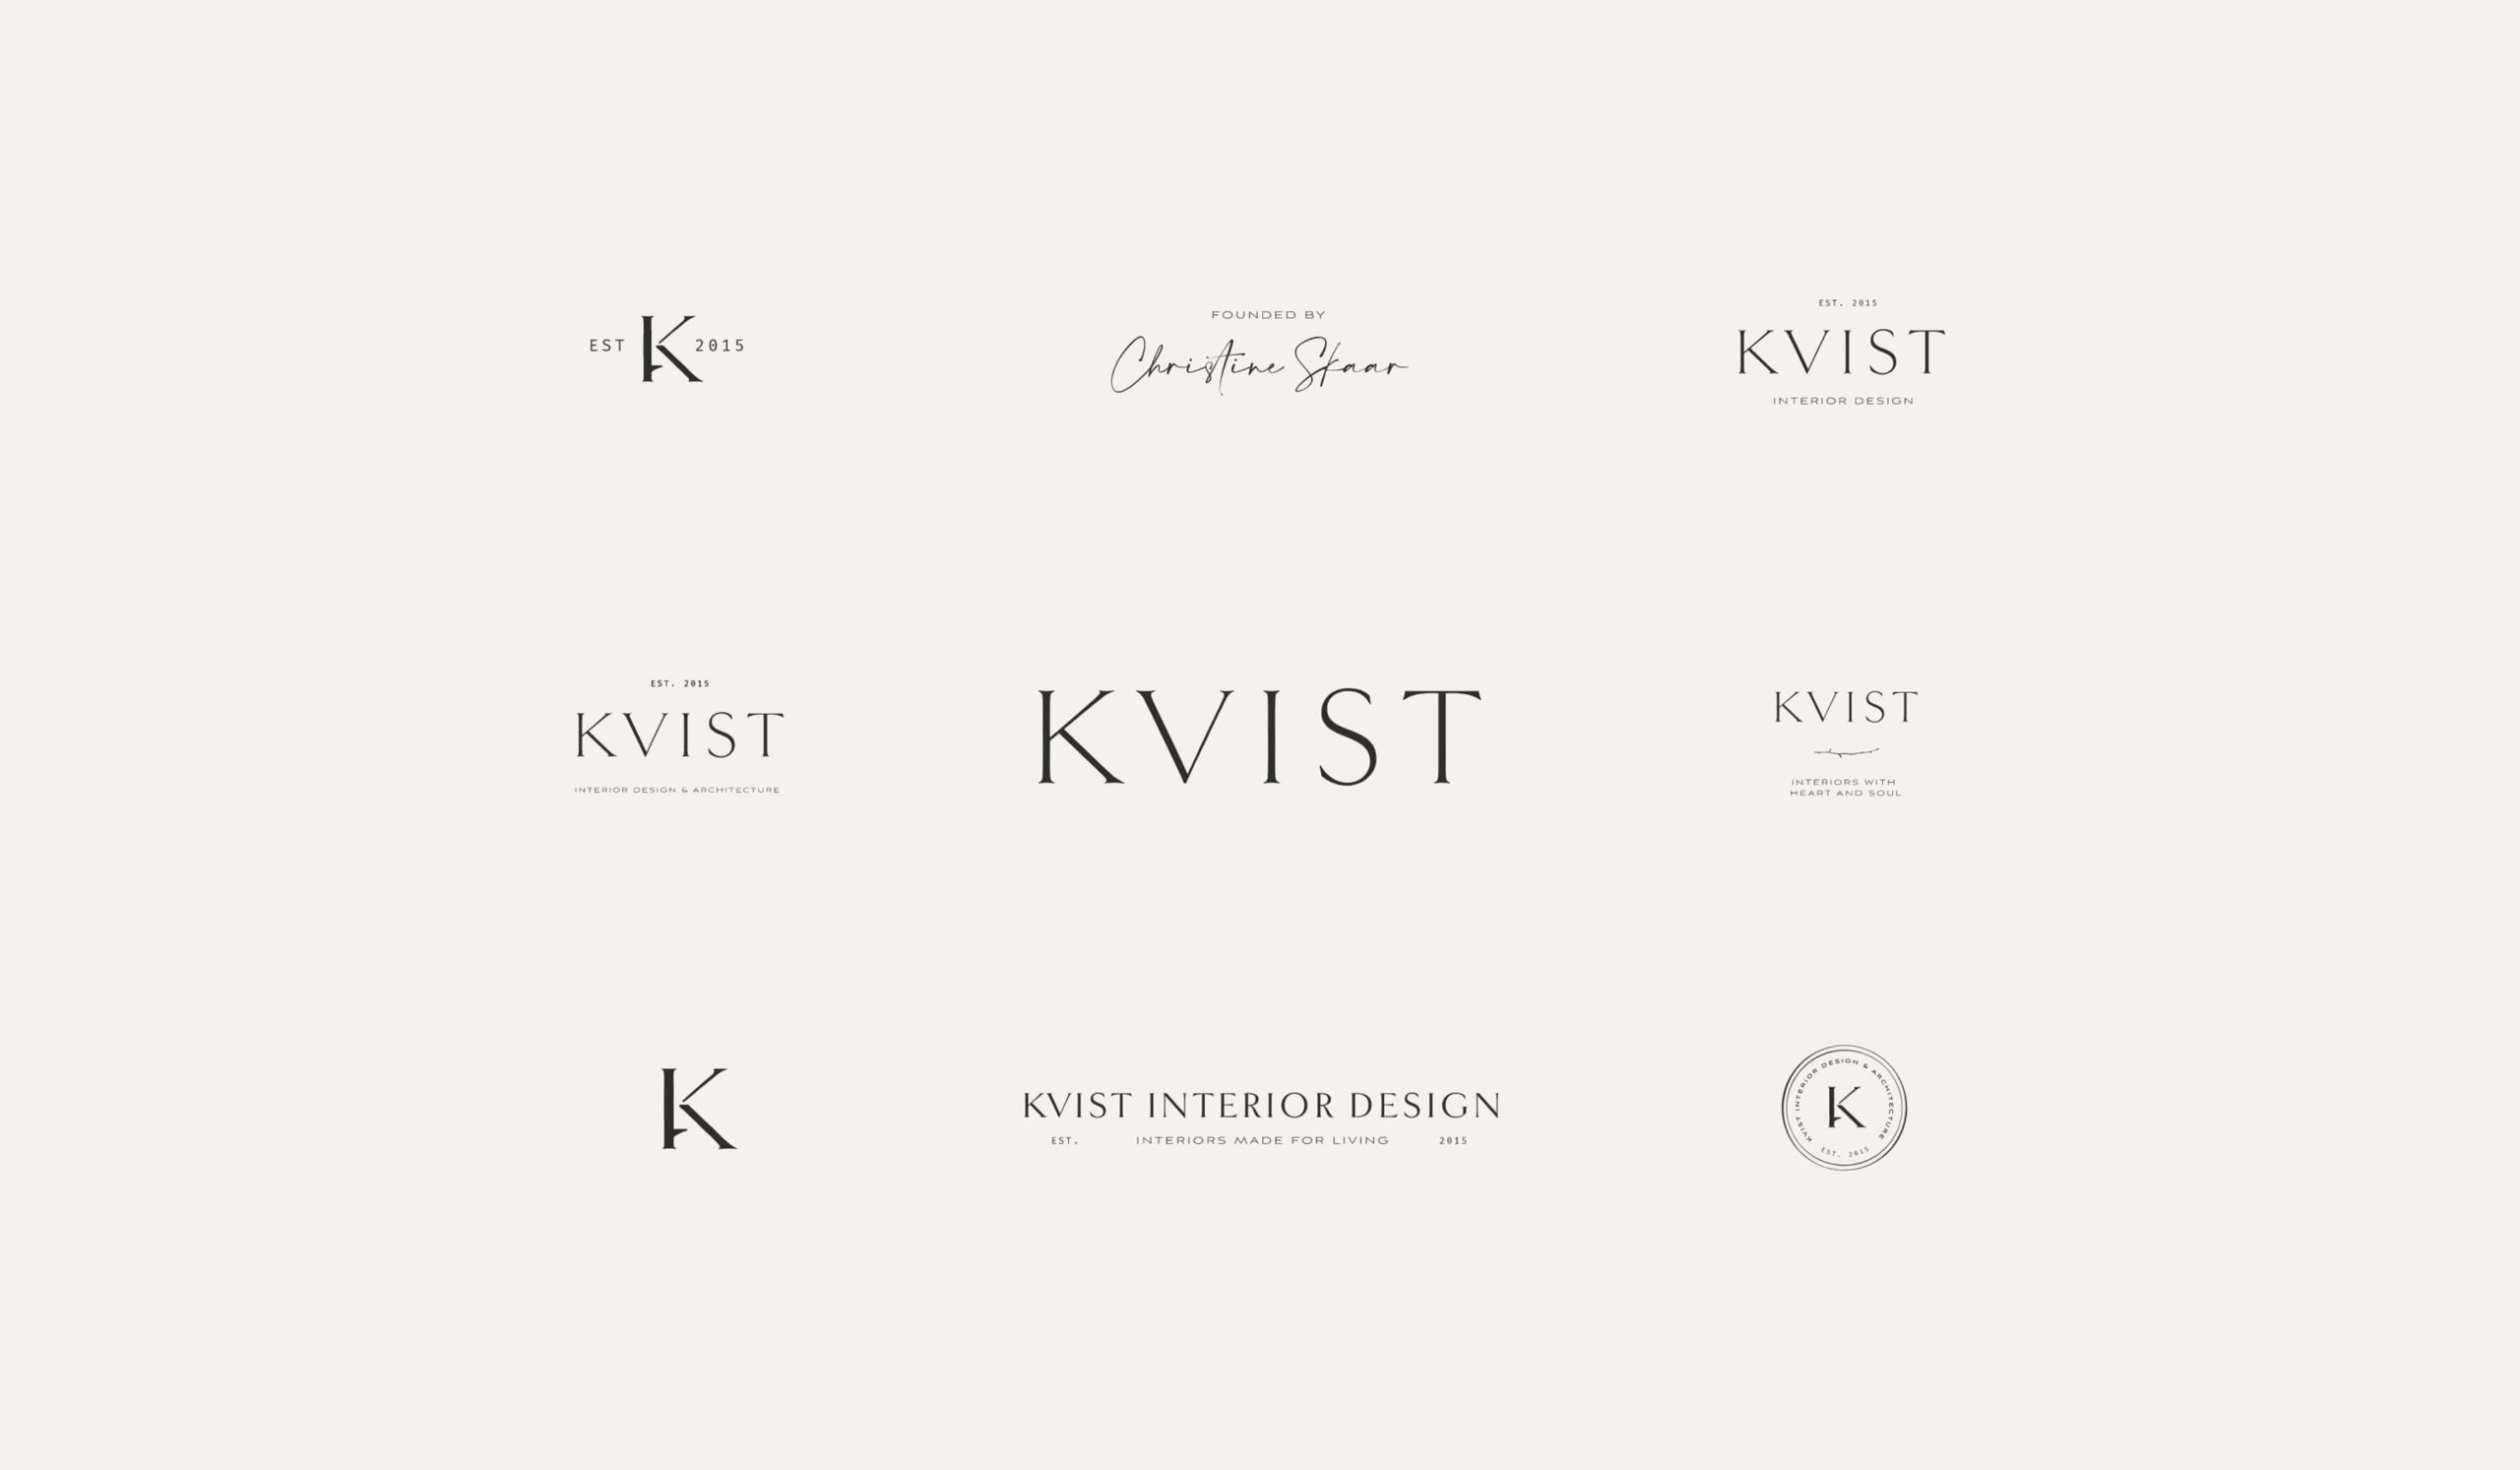 Primary and sub logos for interior design brand, KVIST